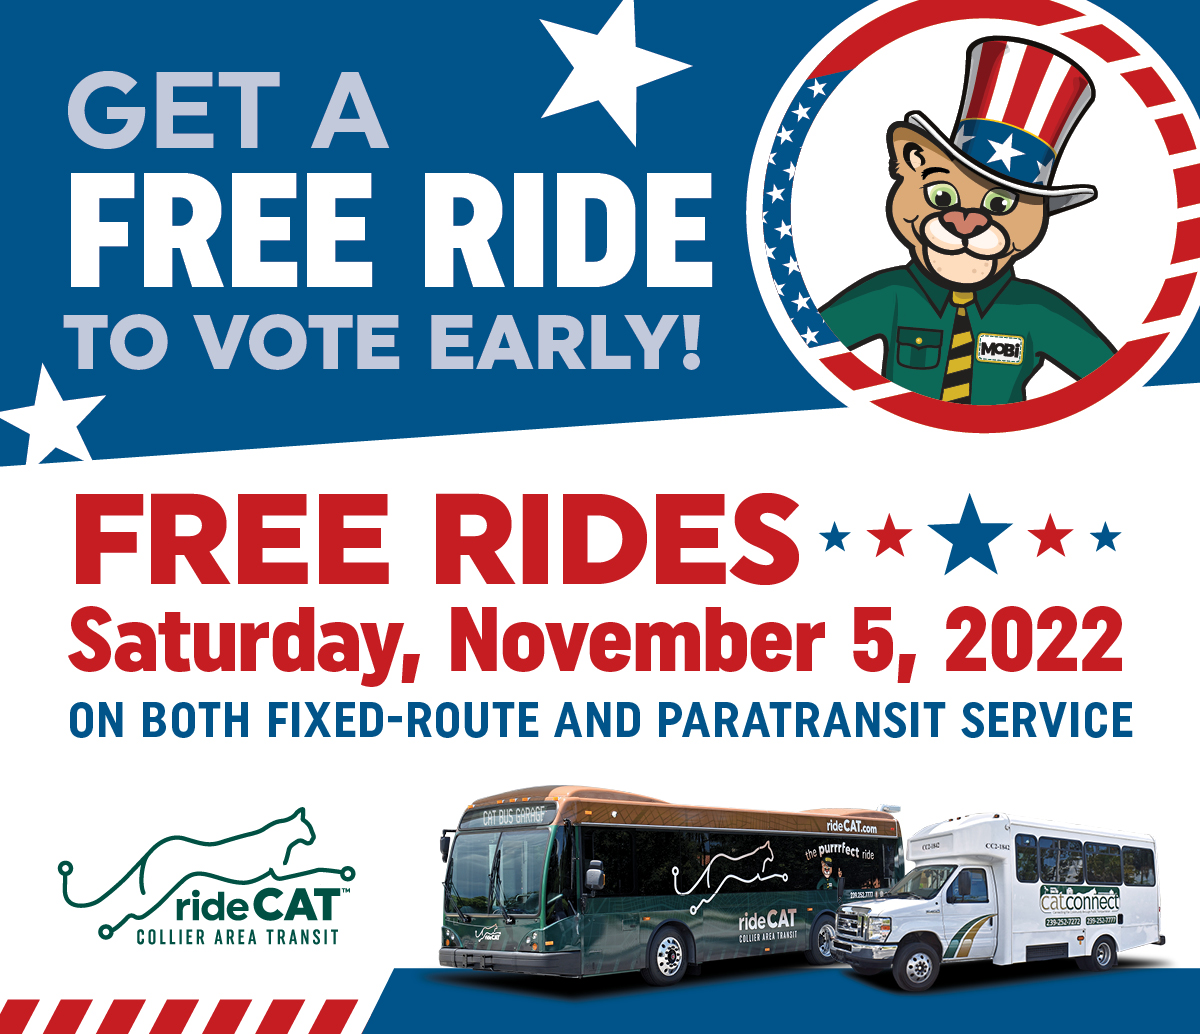 FREE RIDES to vote on Saturday, November 5, 2022!